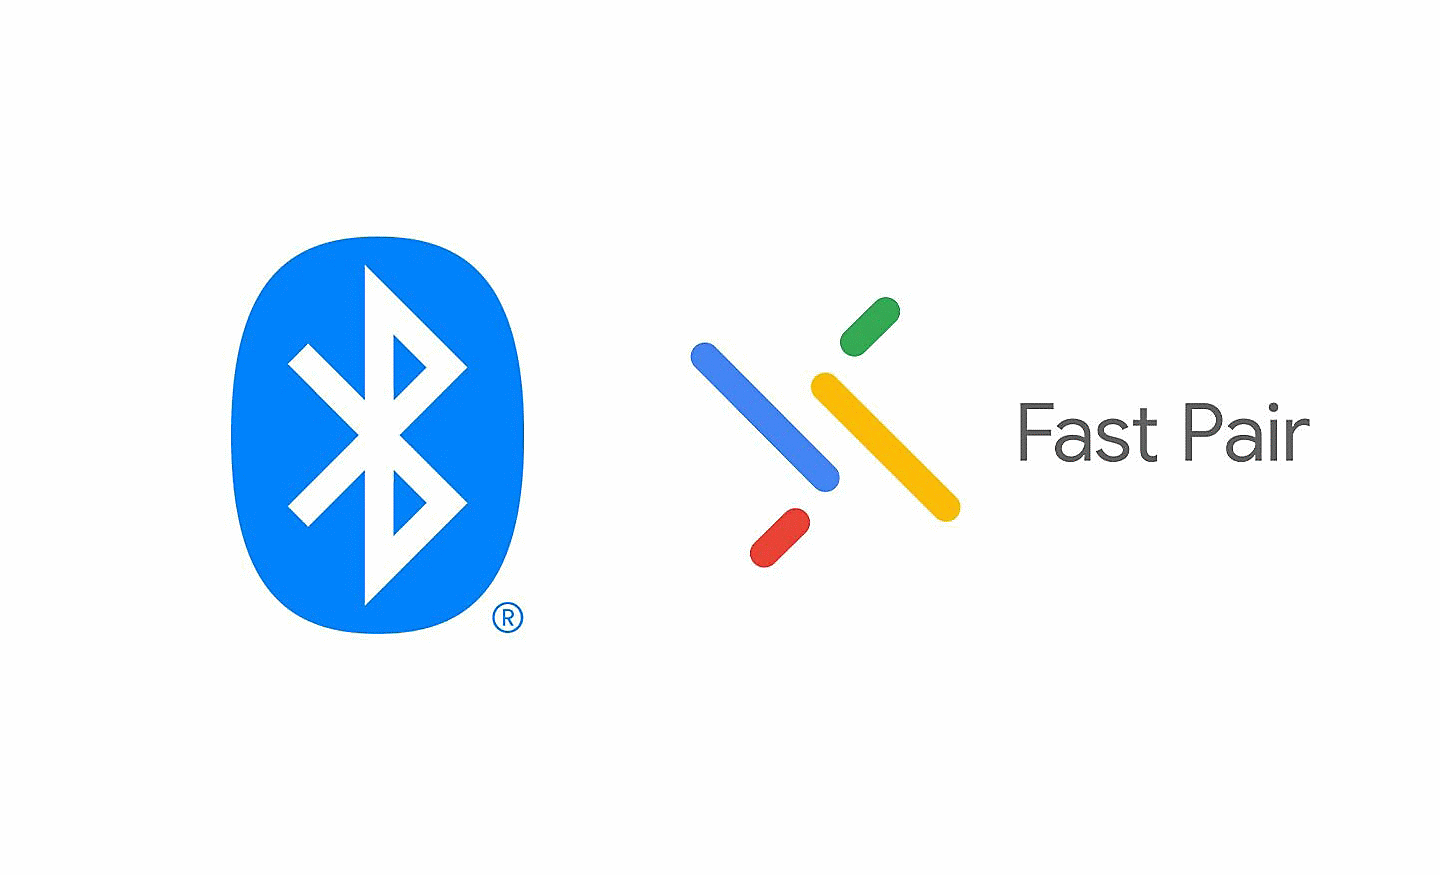 Gambar logo Bluetooth biru di samping logo Google Fast Pair